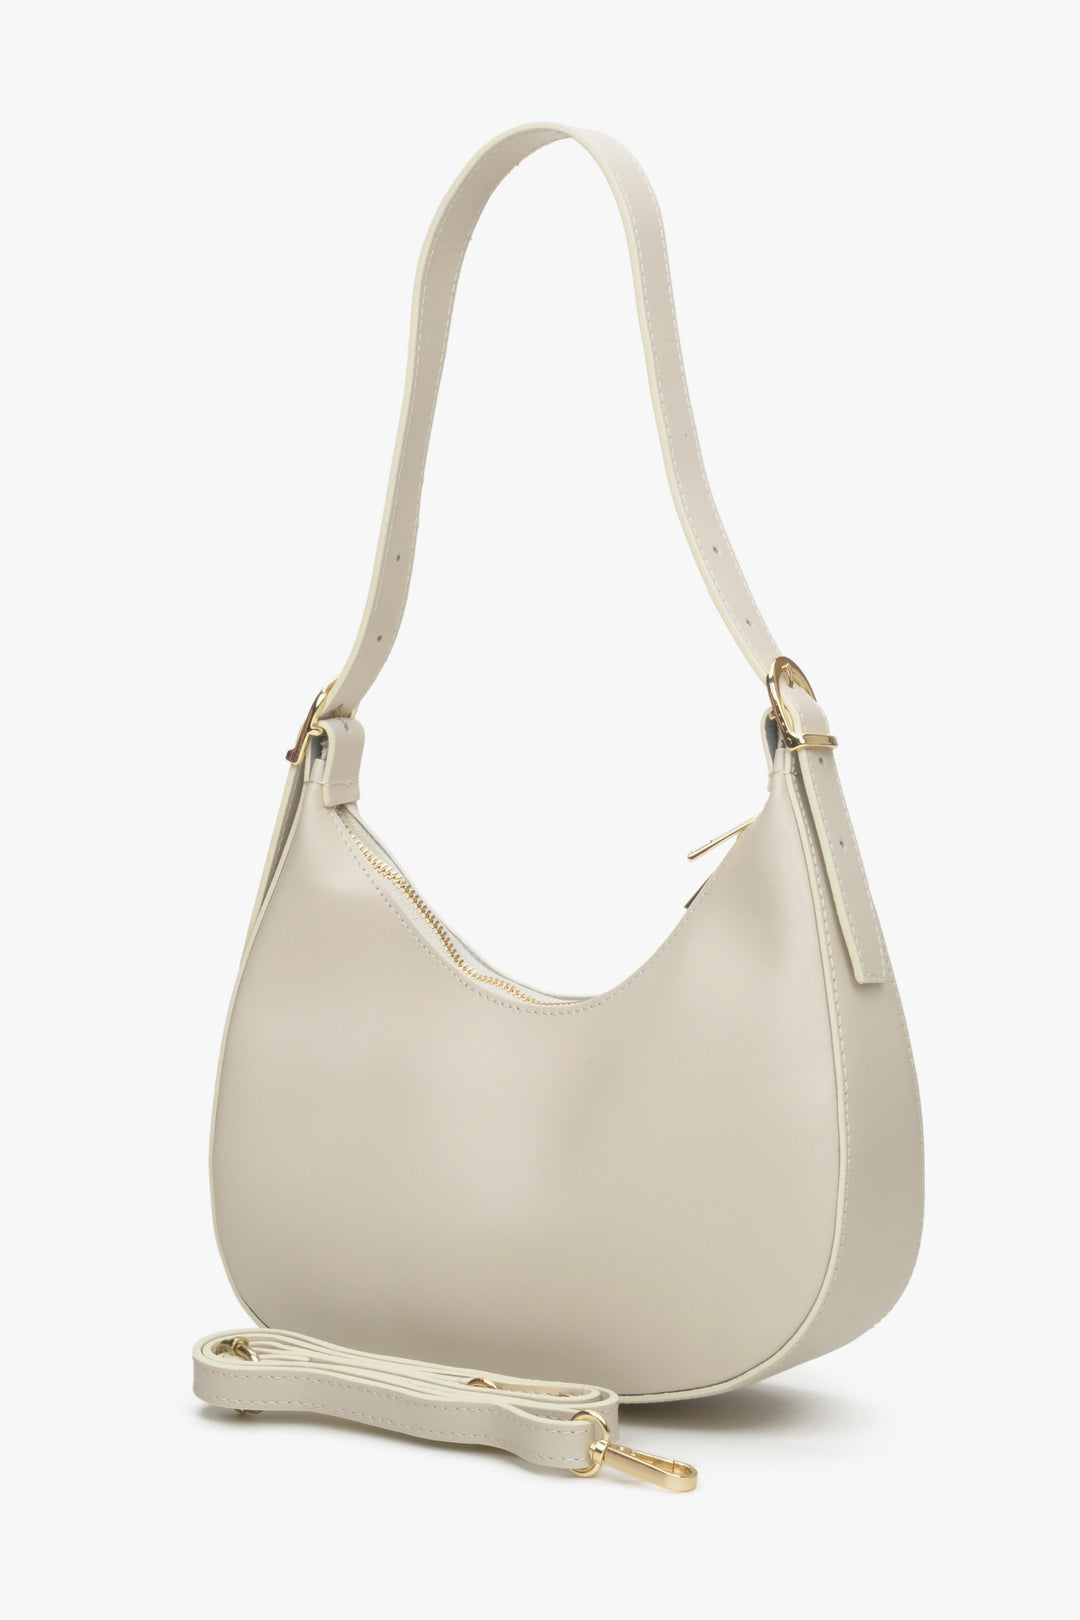 Women's beige handbag by Estro.